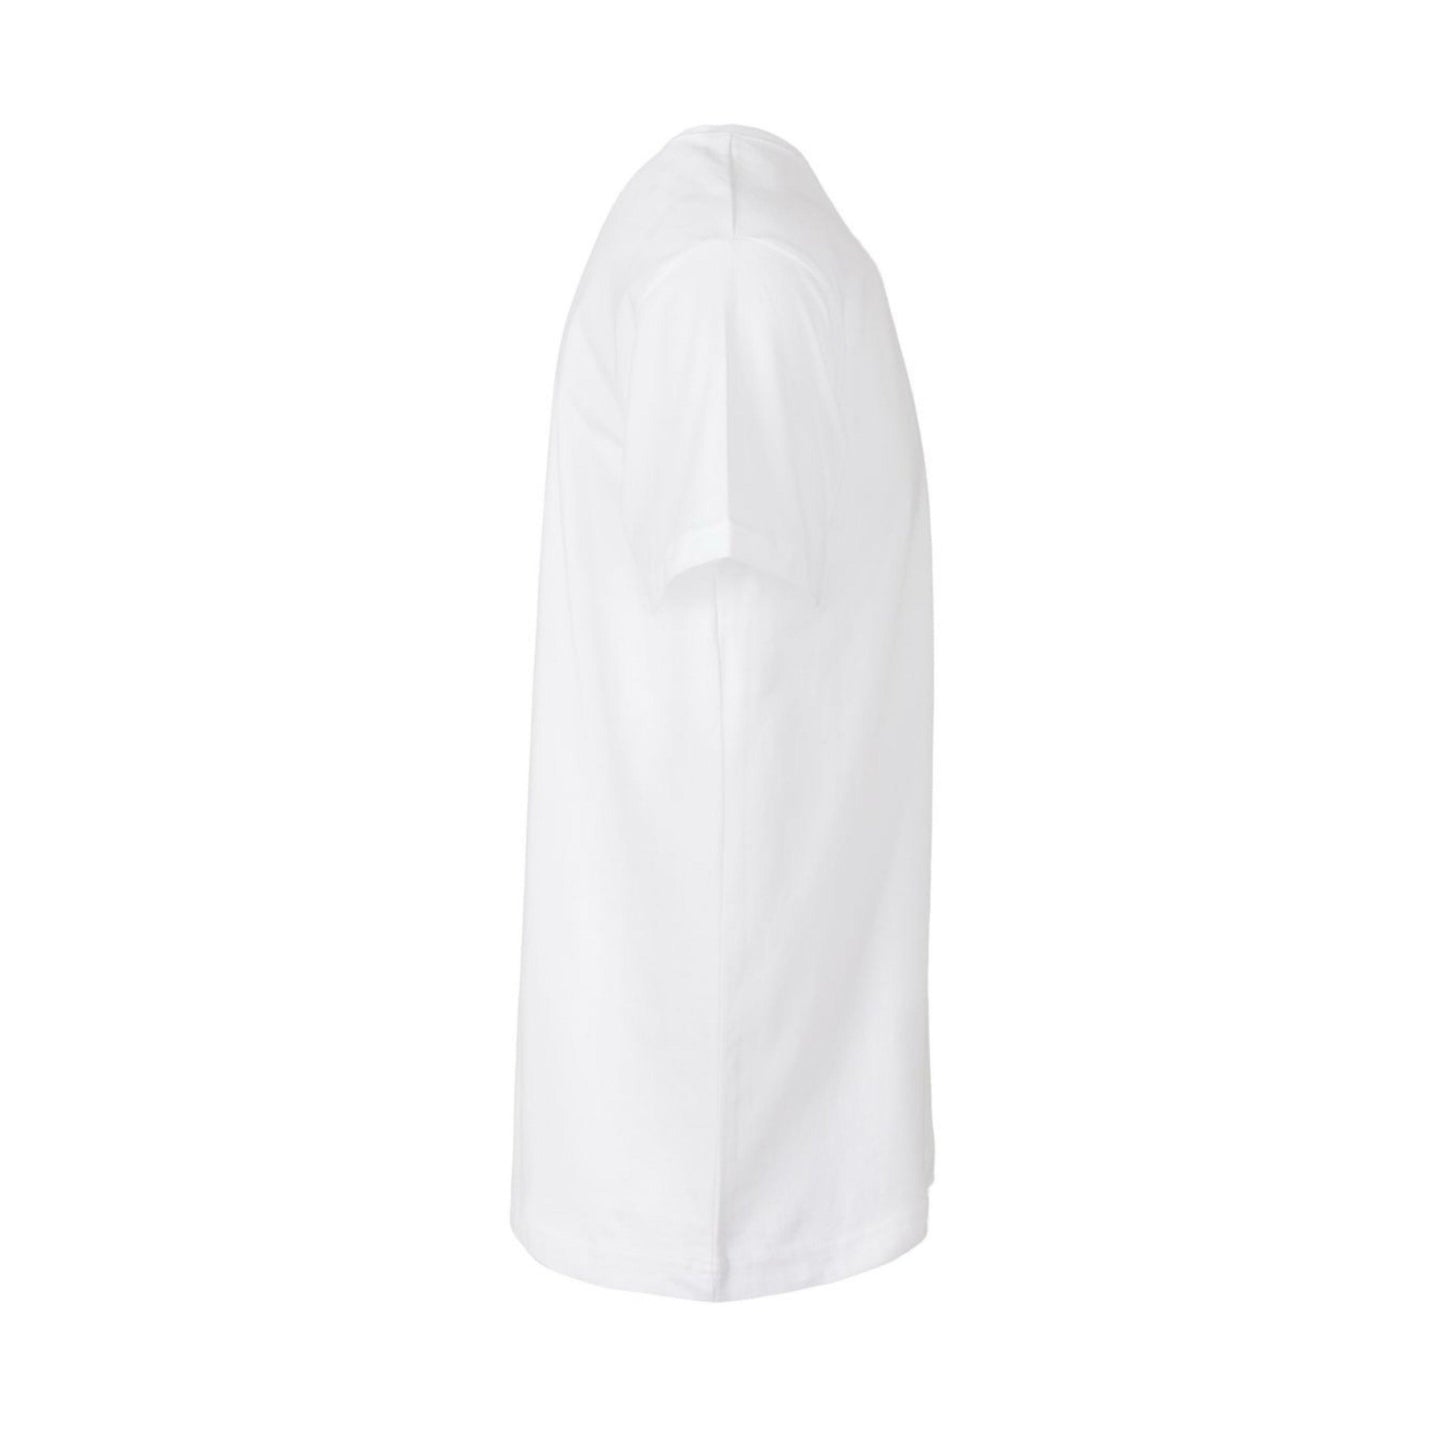 Premium Basic Shirt White/Ice 190 g/m² - DMANERA Atelier